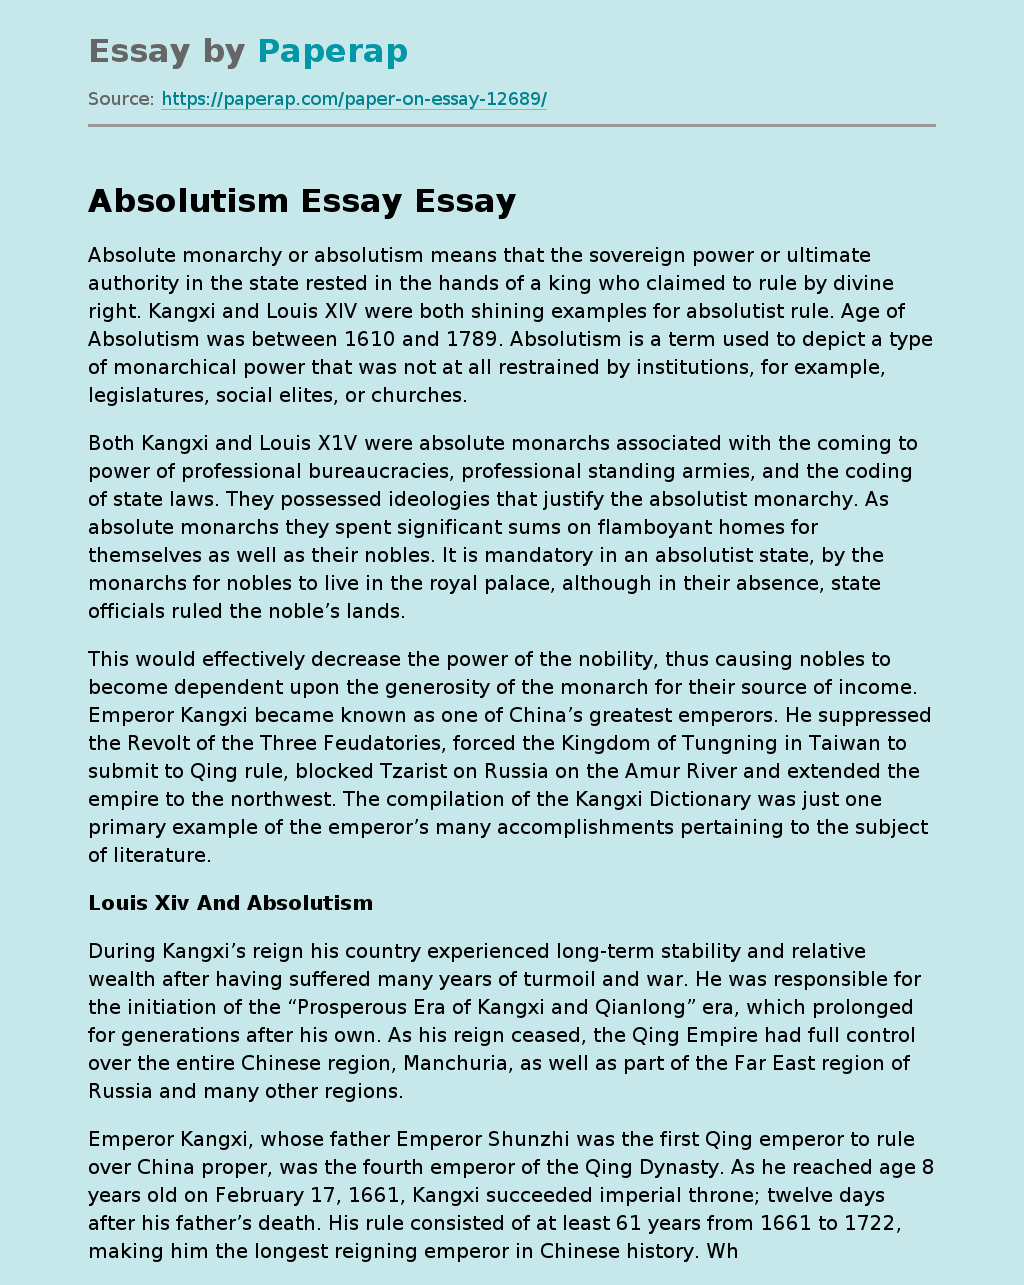 Absolutism Essay